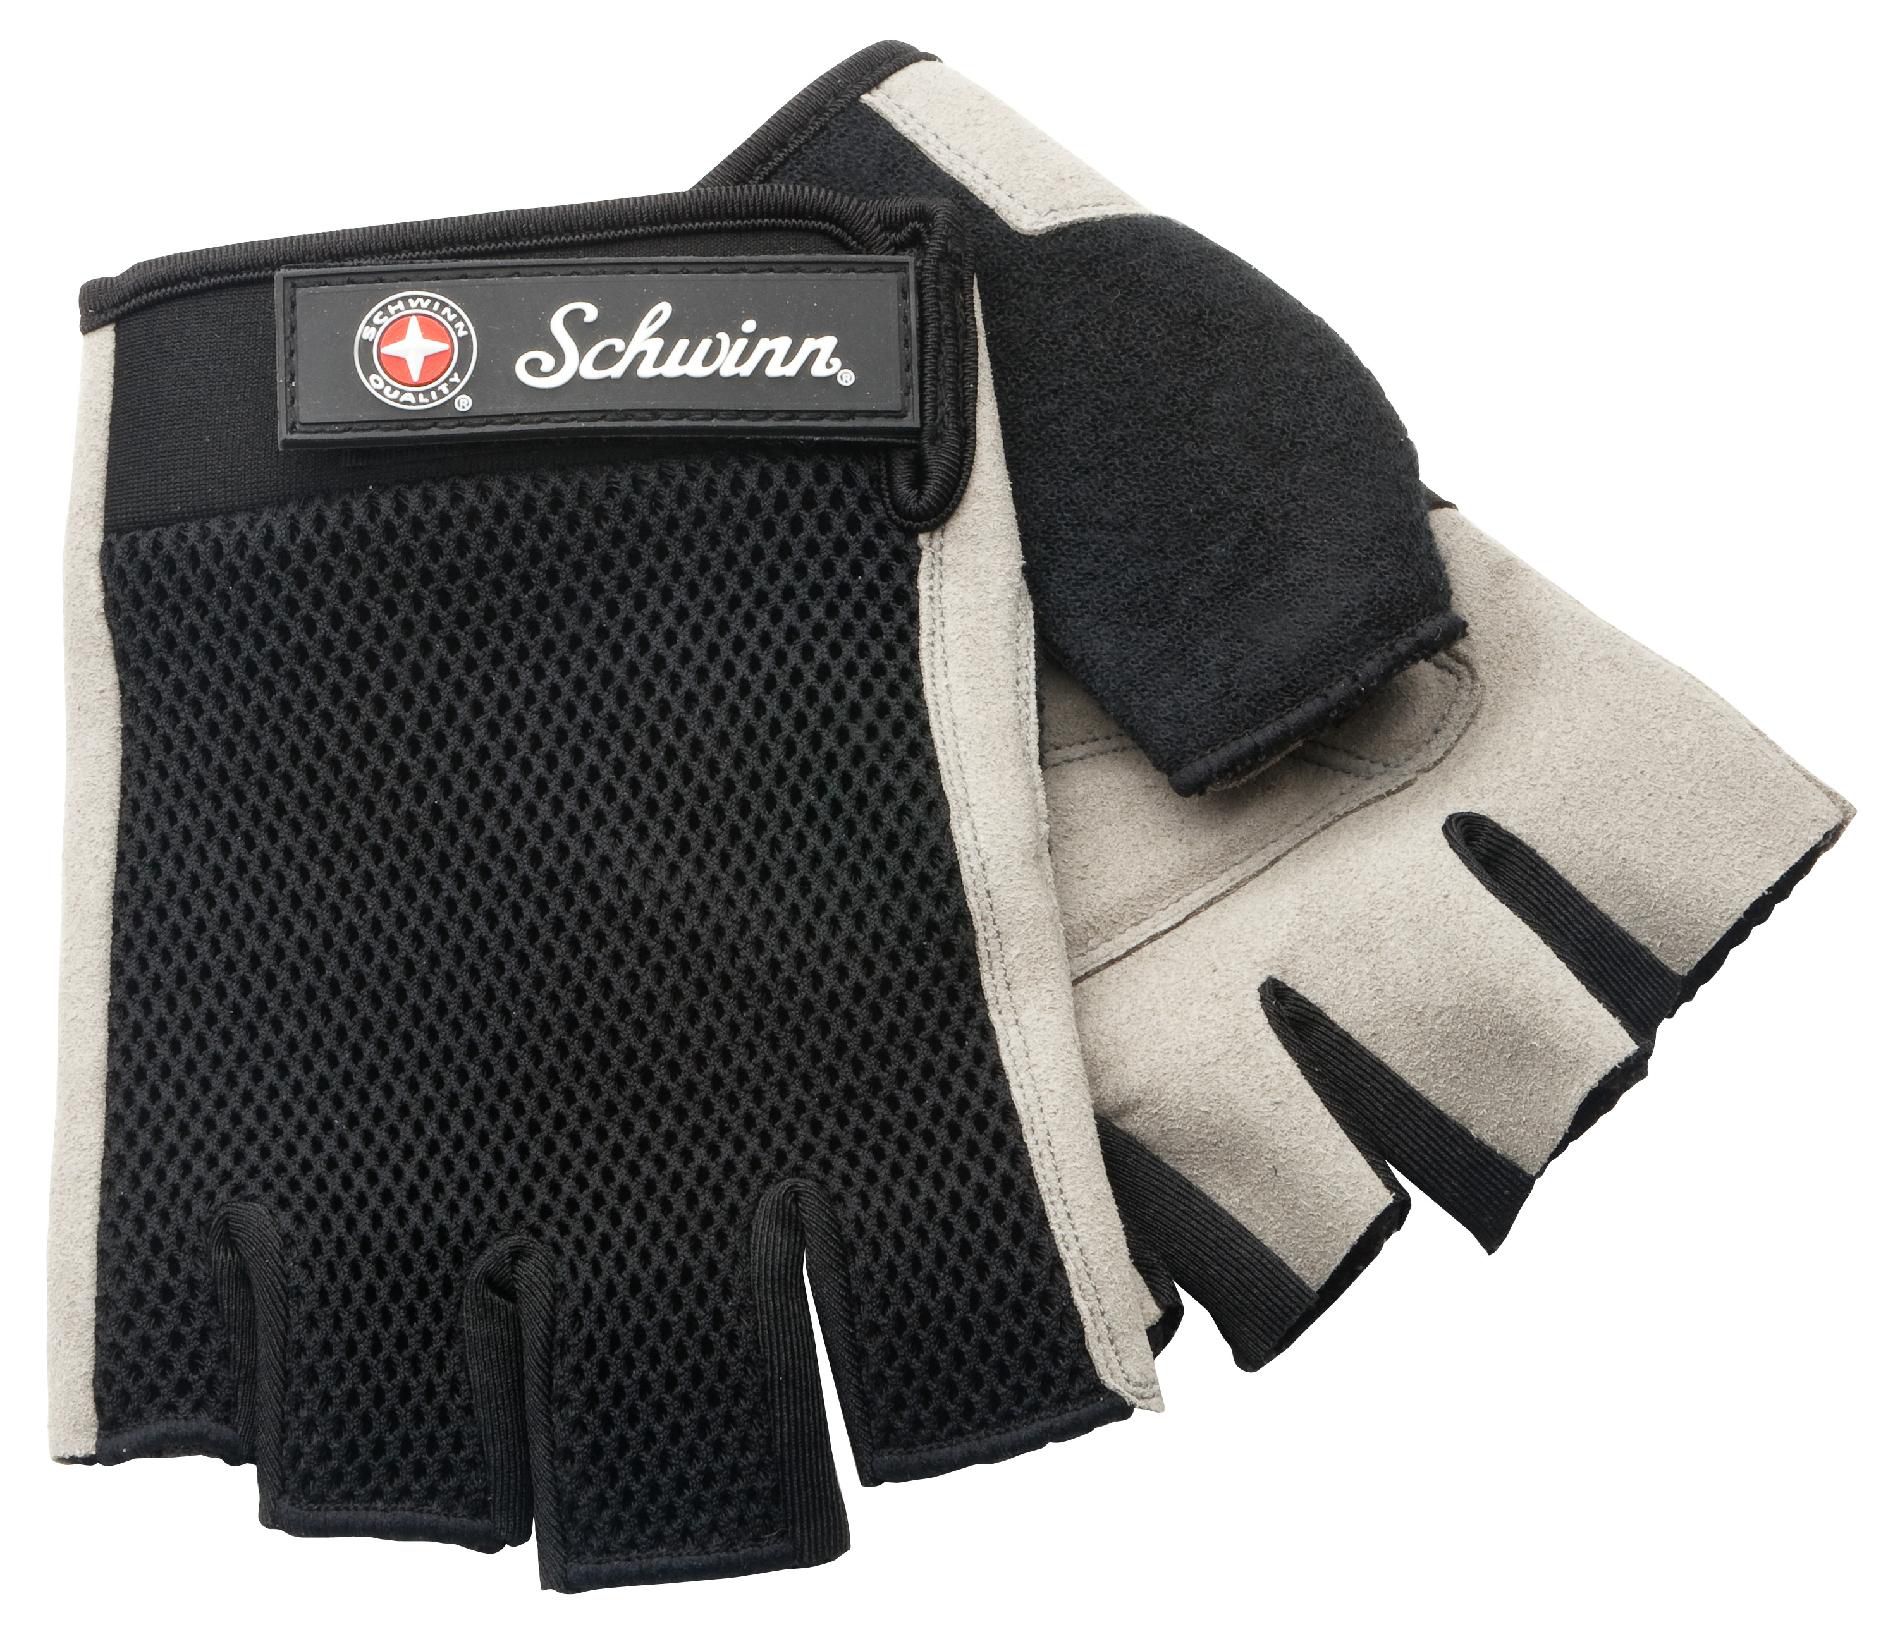 Schwinn Protective Mesh Bike Gloves